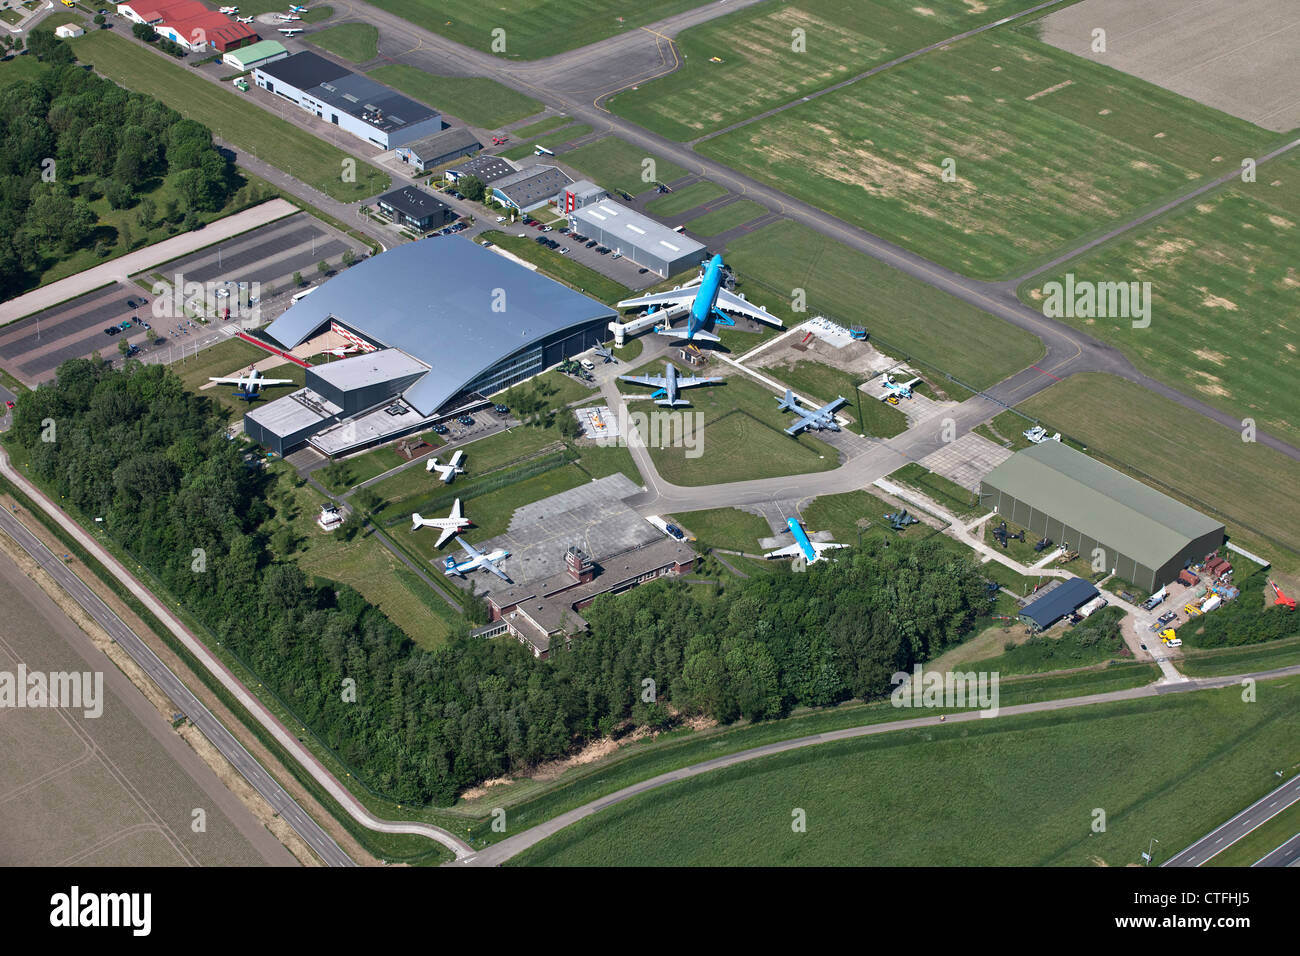 Niederlande, Lelystad, Flugzeug Museum Aviodrome genannt. Luft. Stockfoto